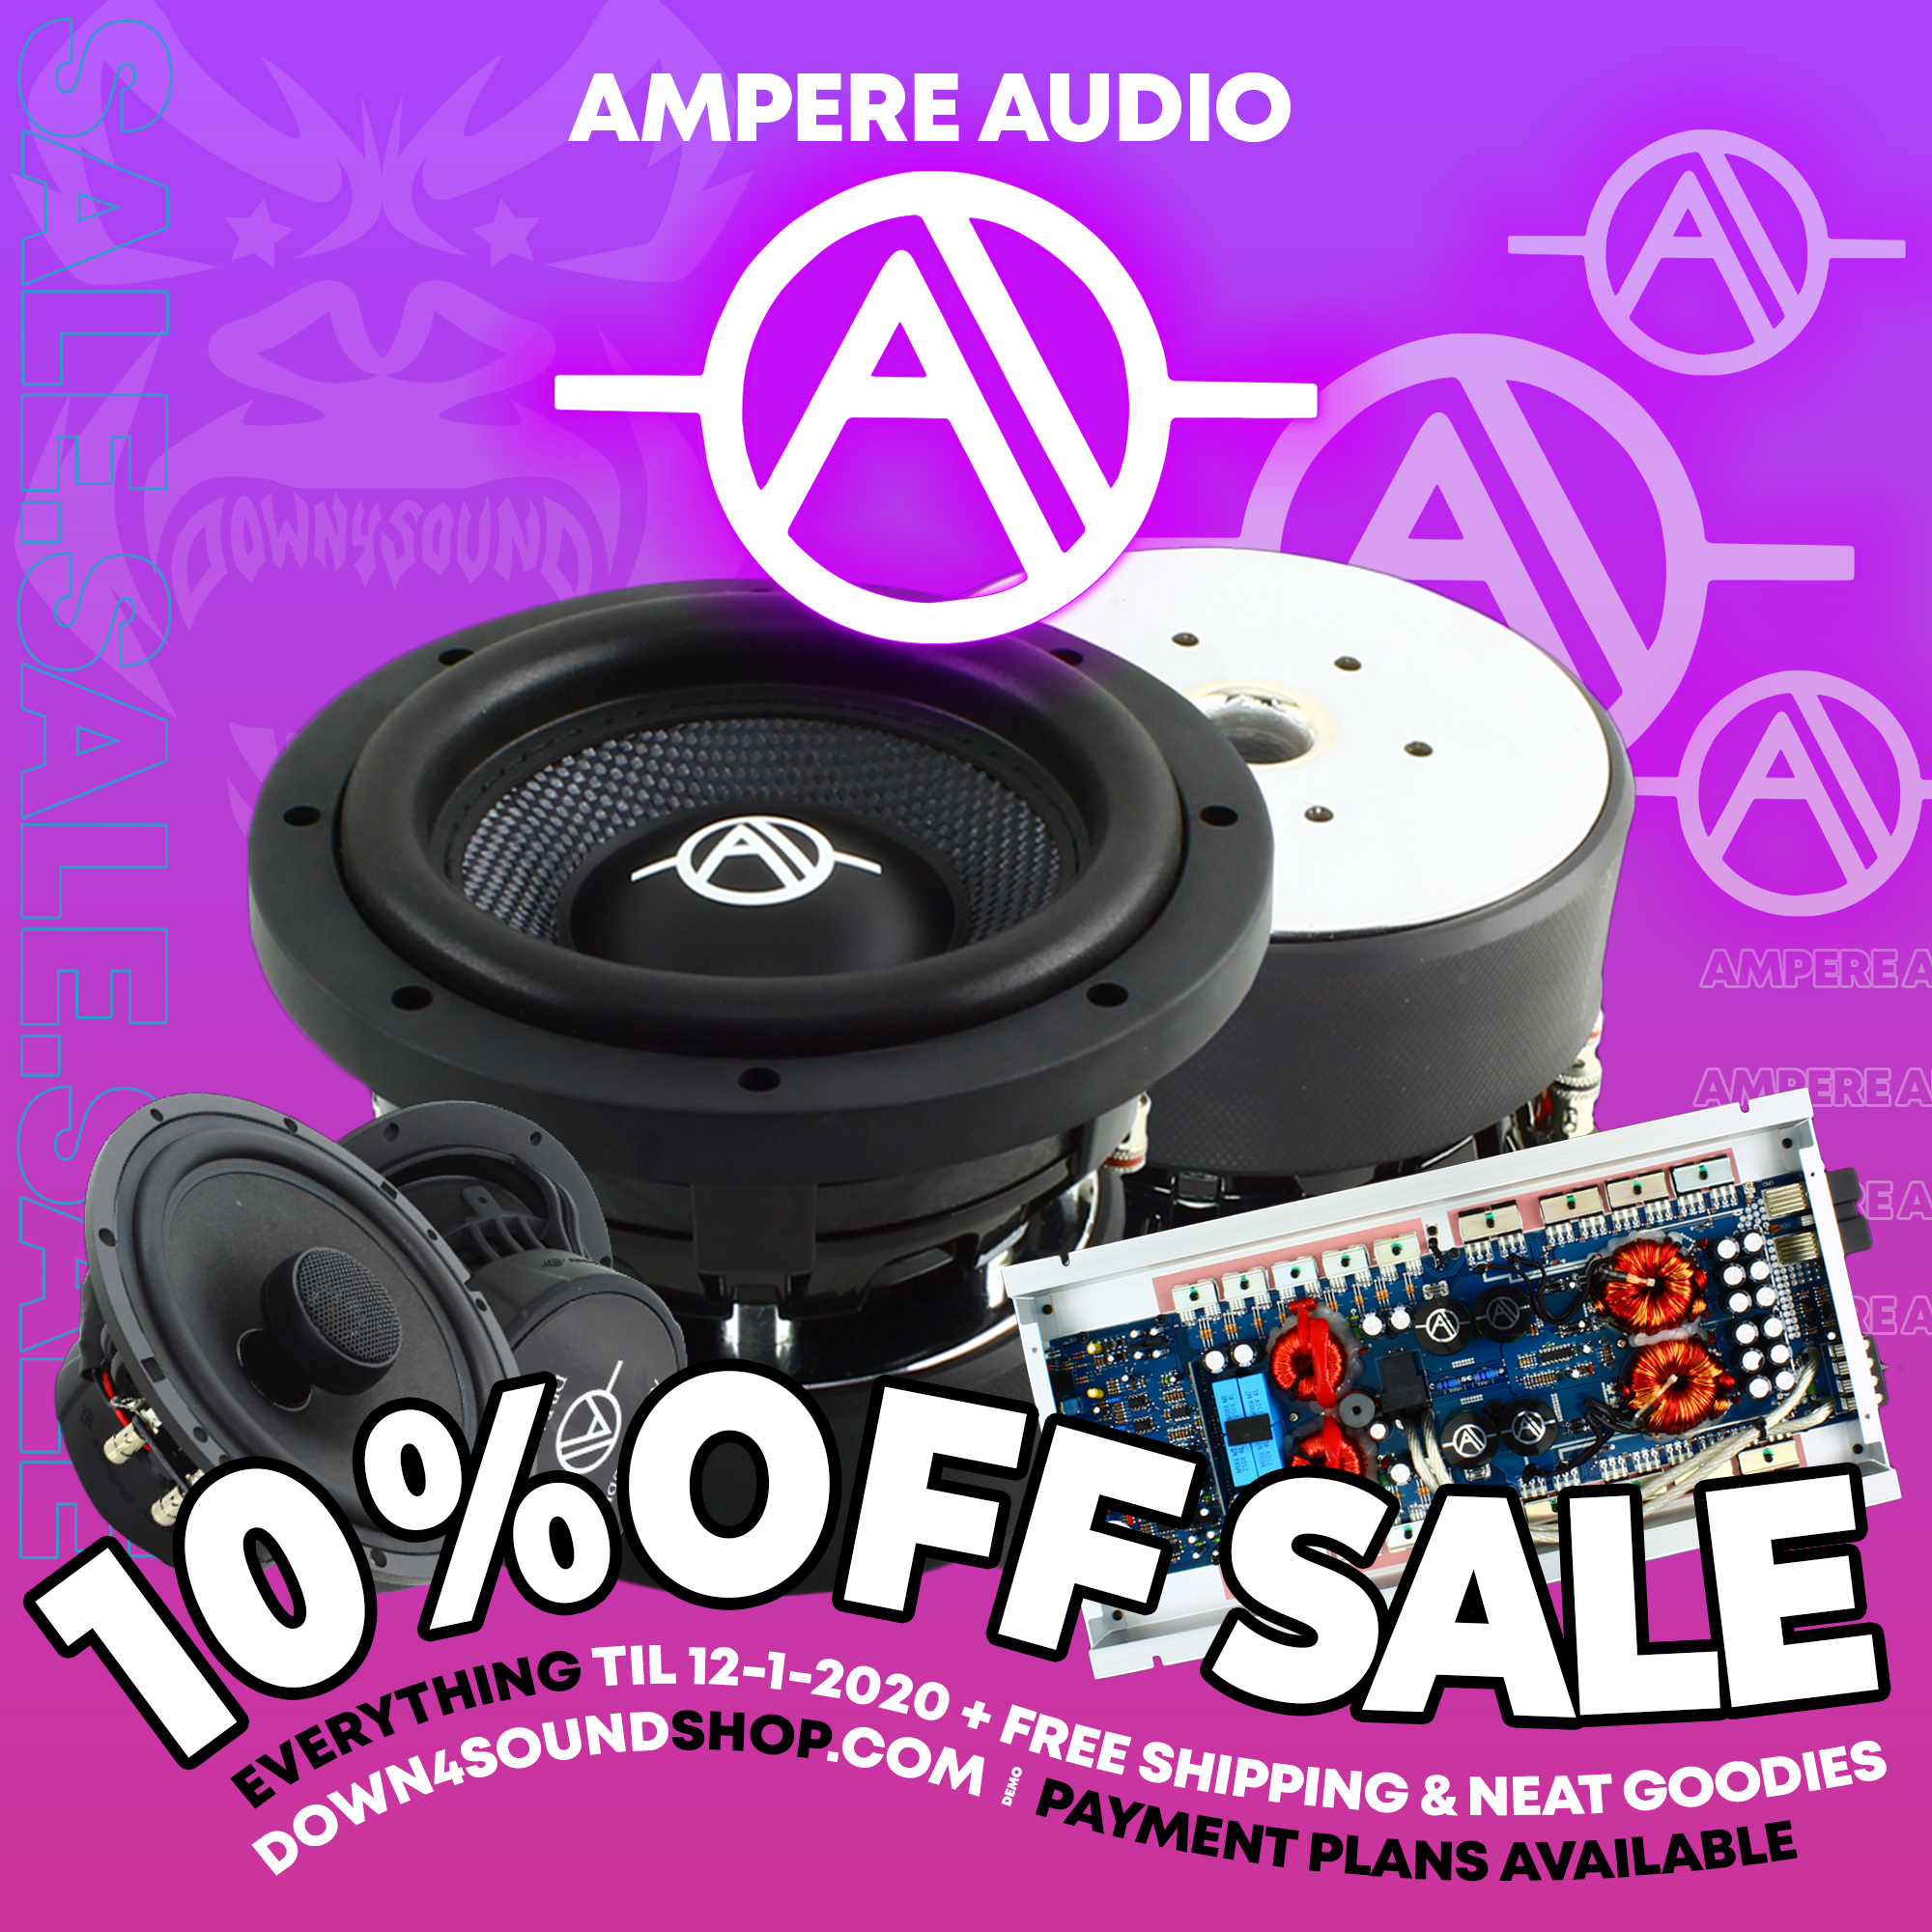 Ampere Audio Black Friday 2020